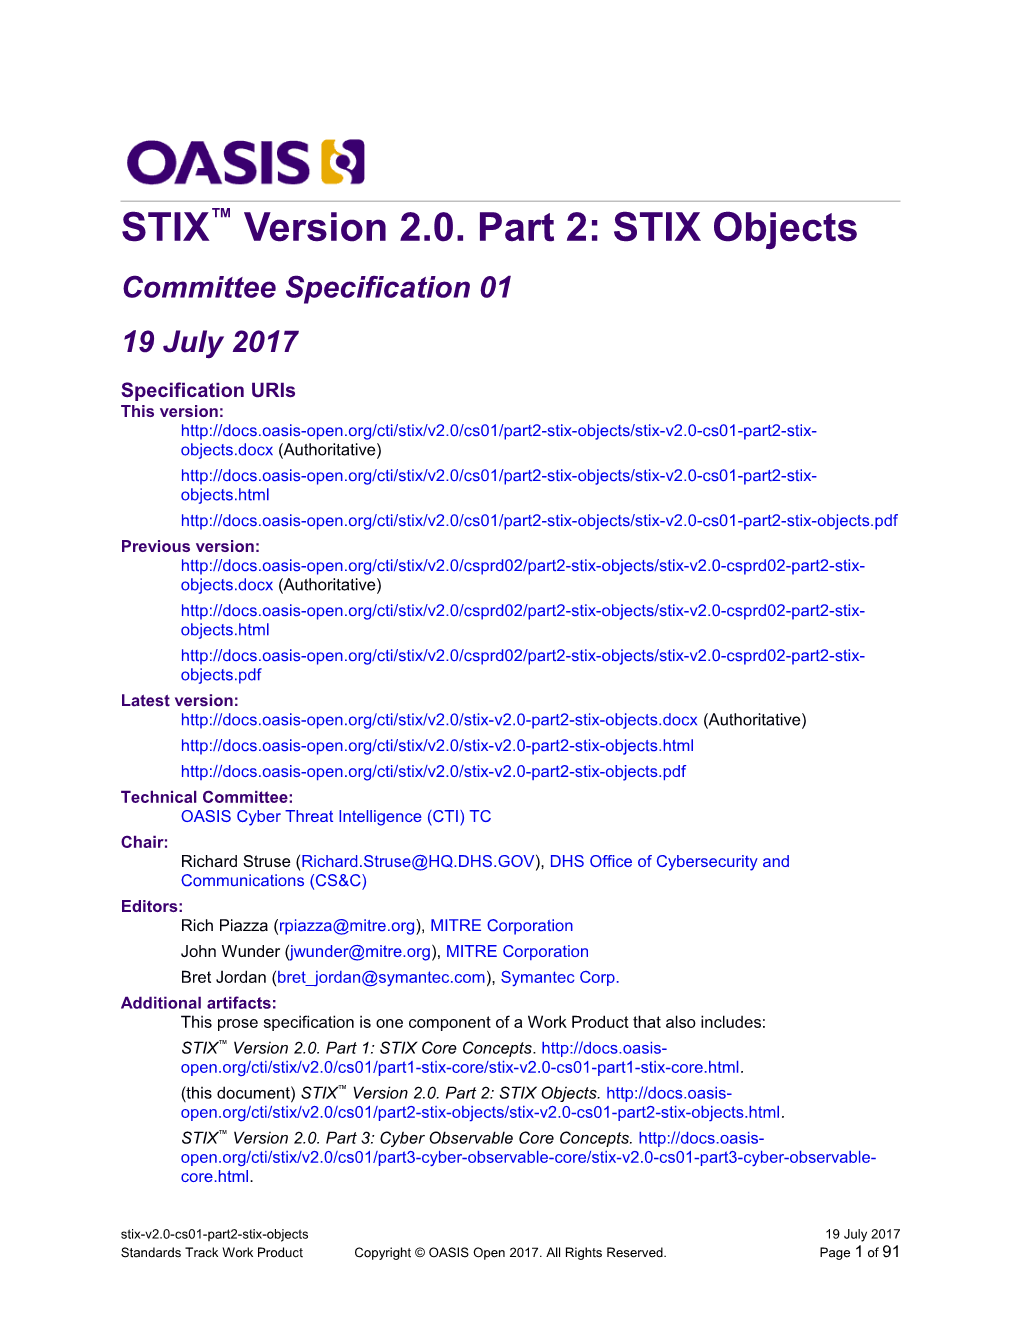 STIX Version 2.0. Part 2: STIX Objects